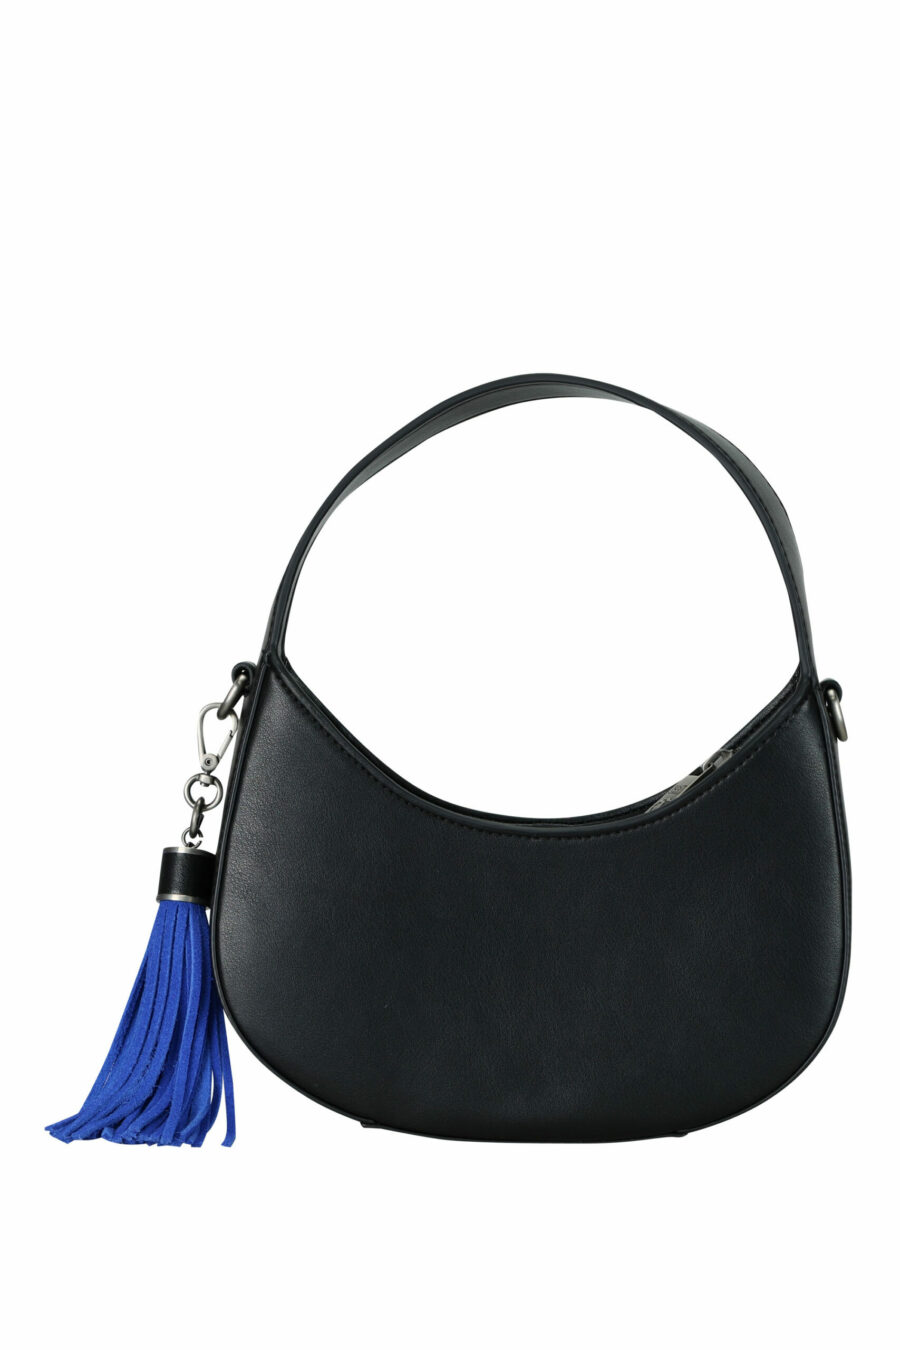 Black shoulder bag with monochrome circular "c" logo - 8052672642738 2 scaled